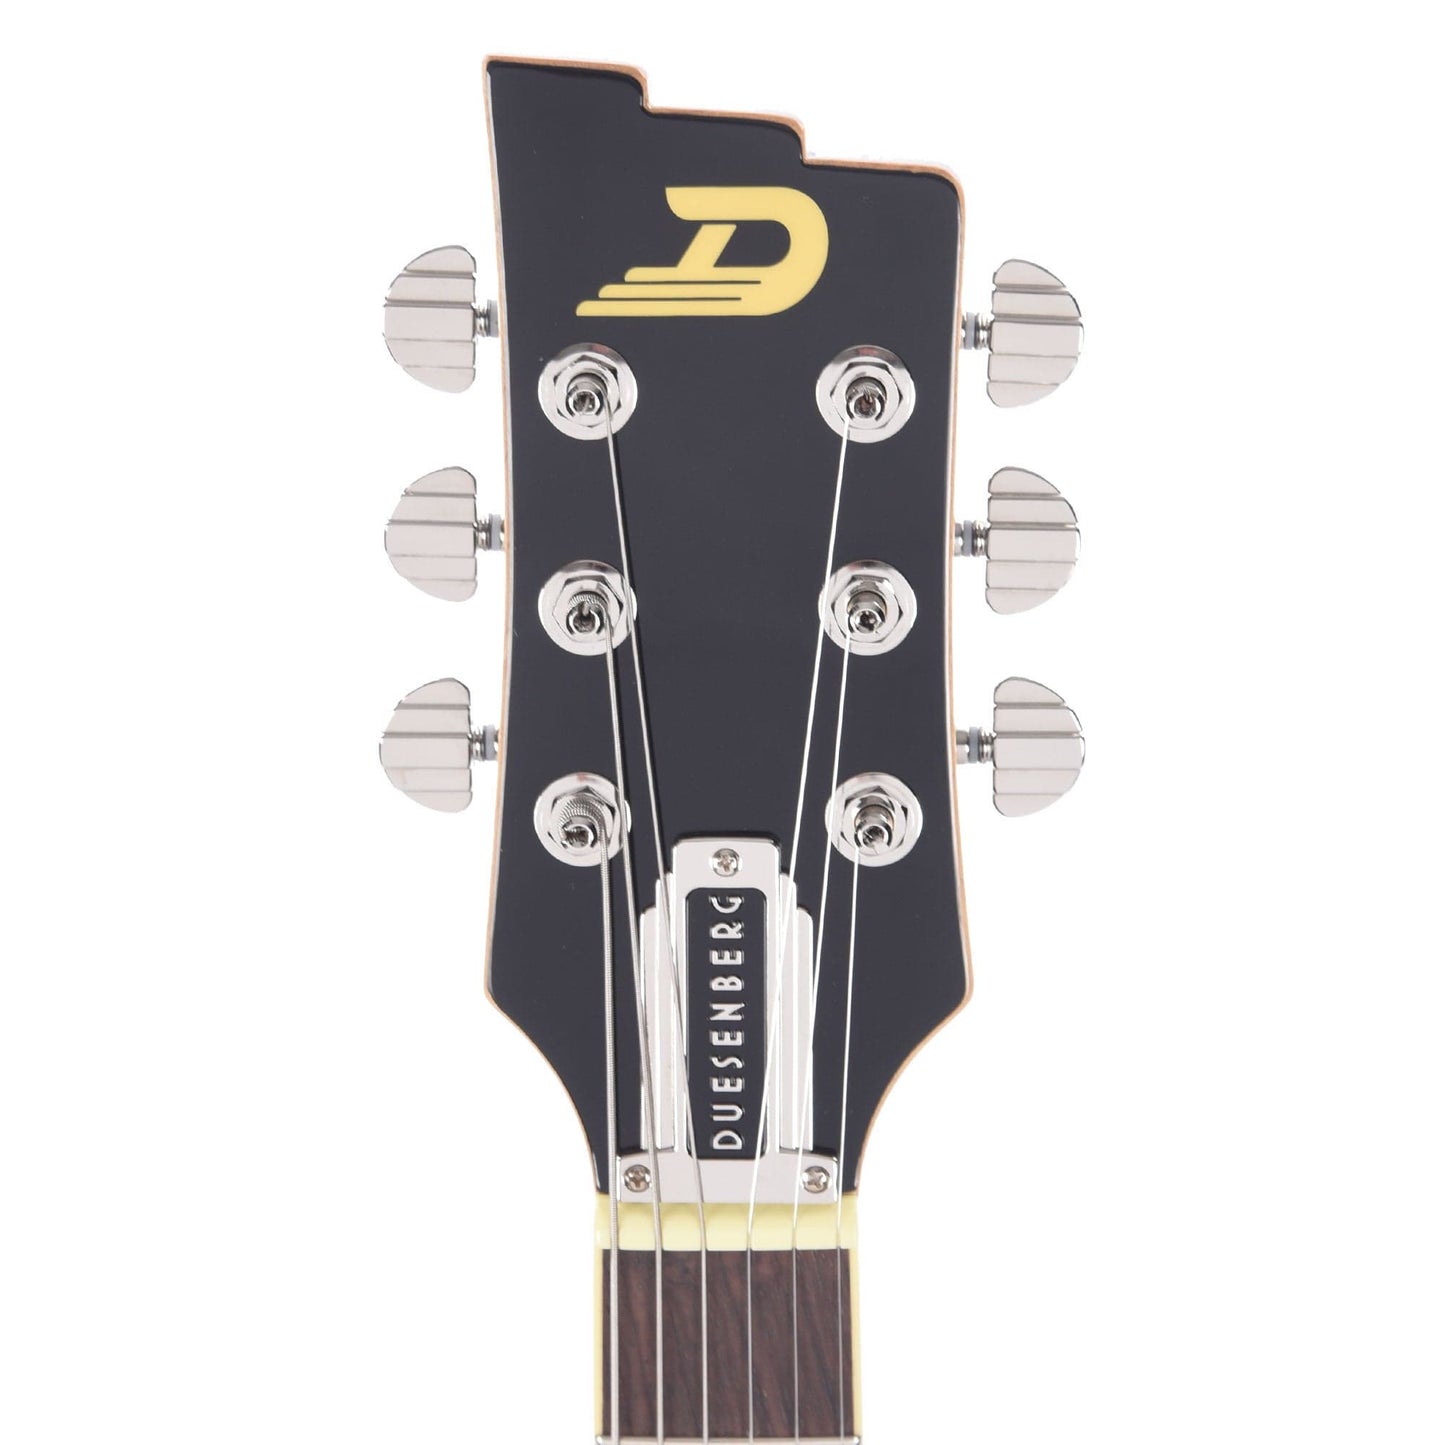 Duesenberg Paloma Black Sparkle Electric Guitars / Solid Body